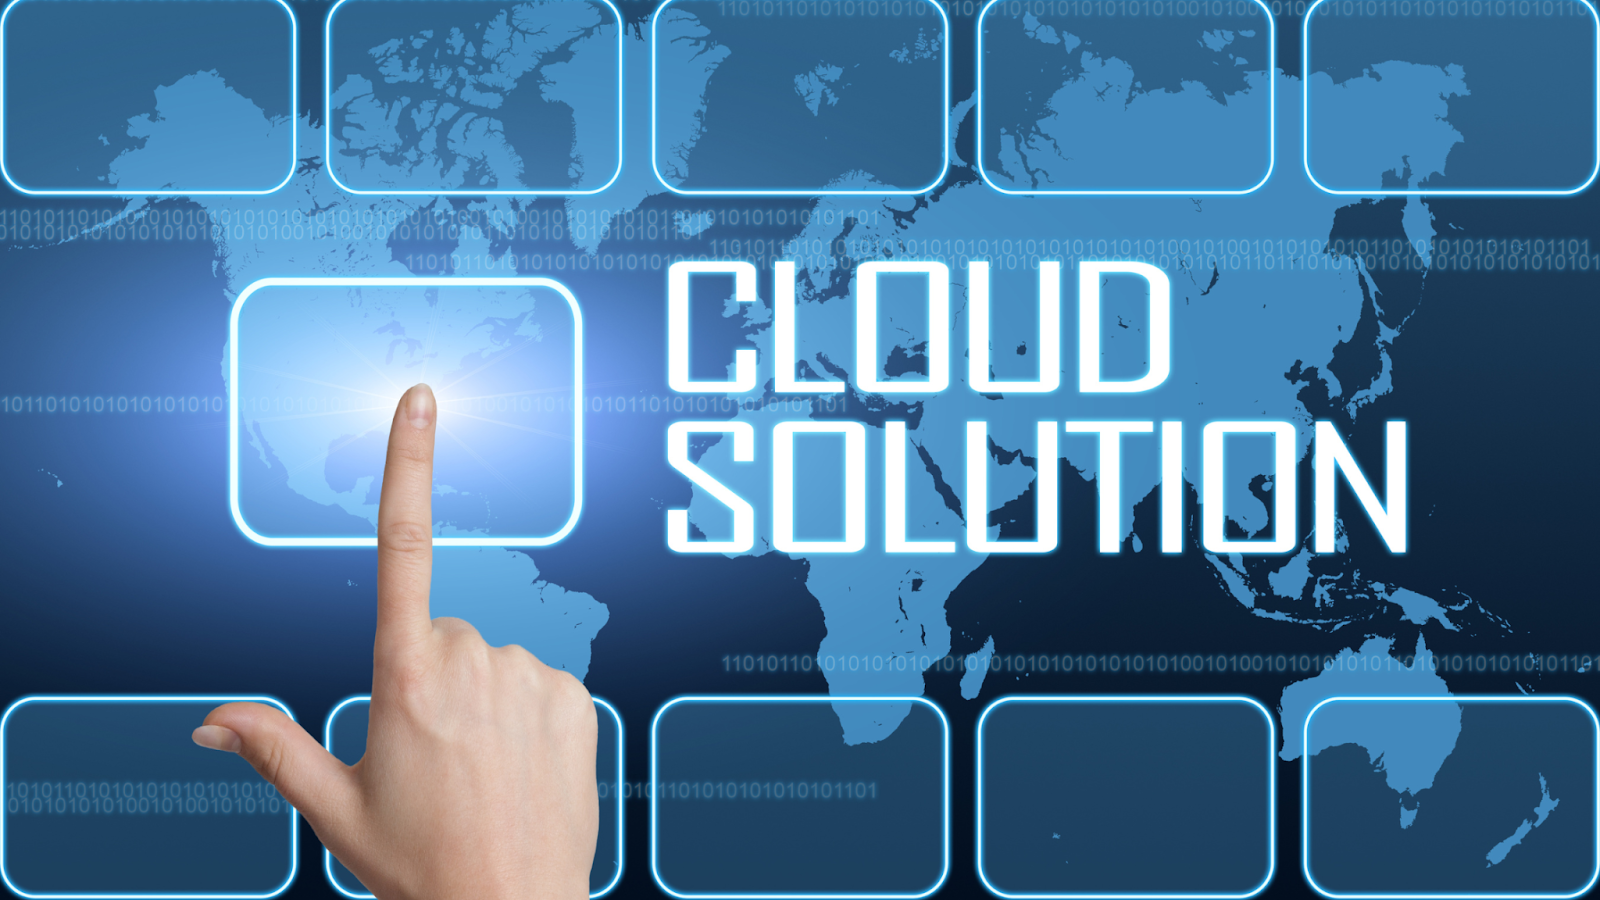 Custom Cloud Solutions